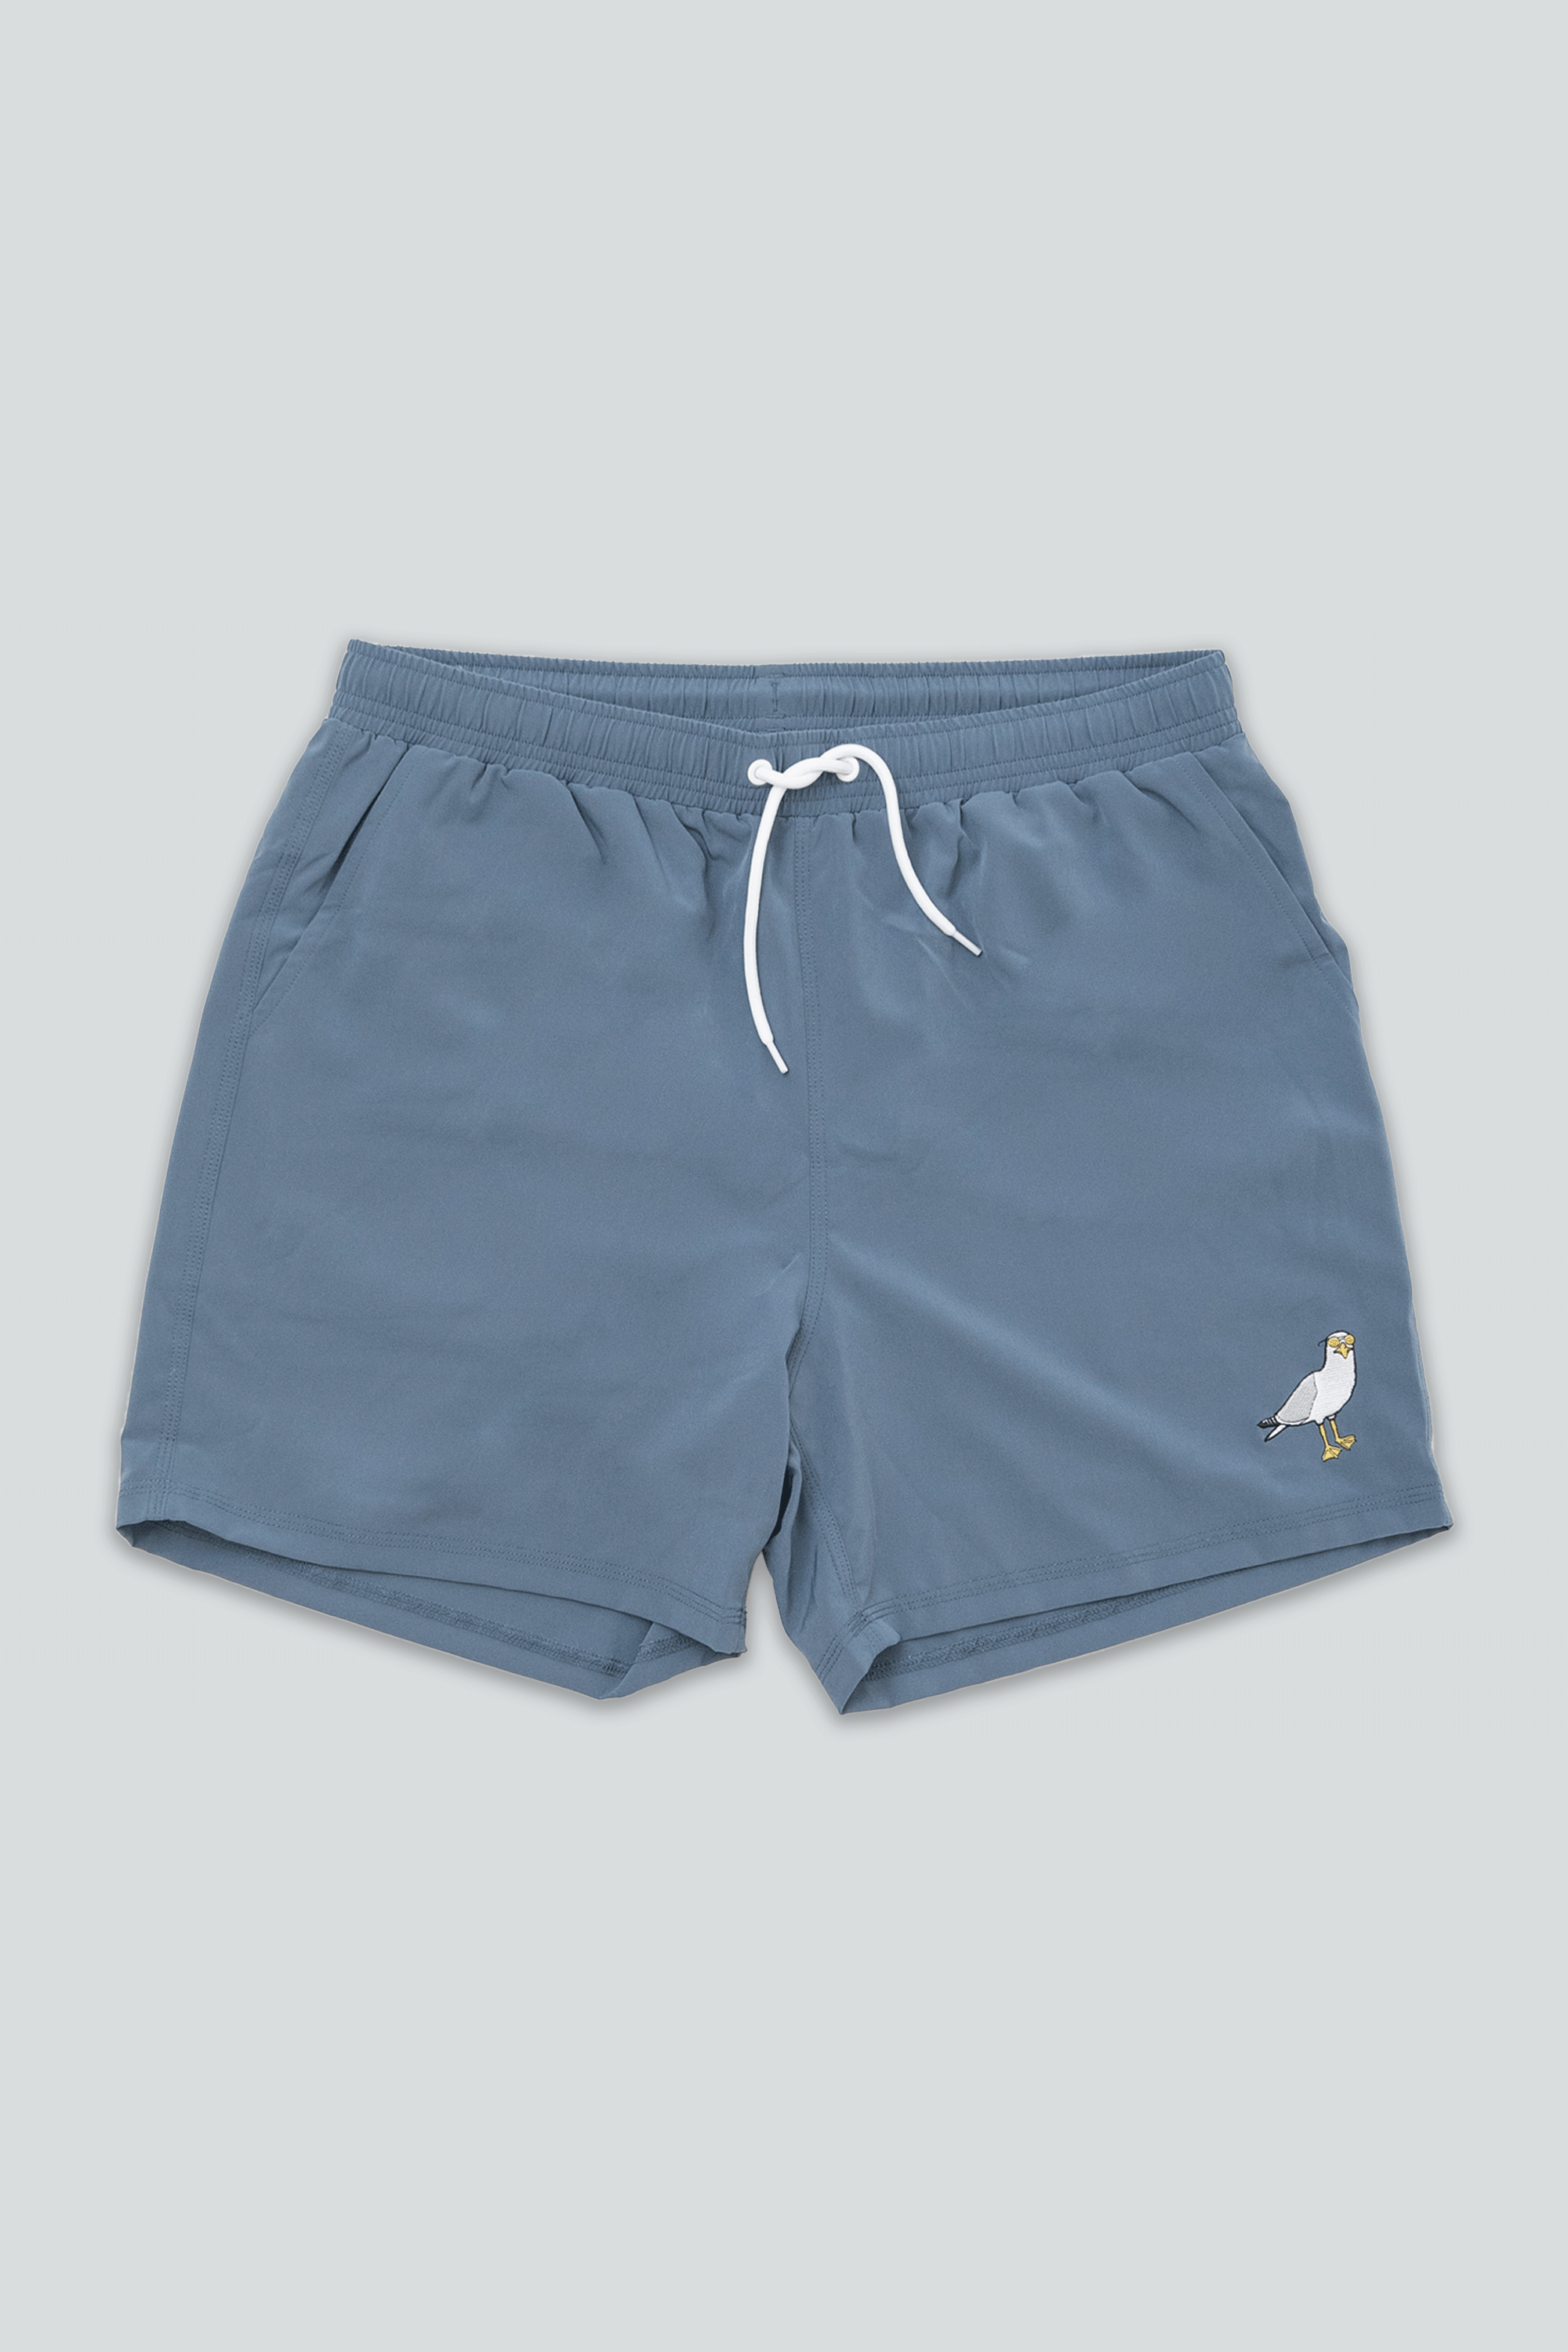 Mini Sunglass Seagull Swim Shorts